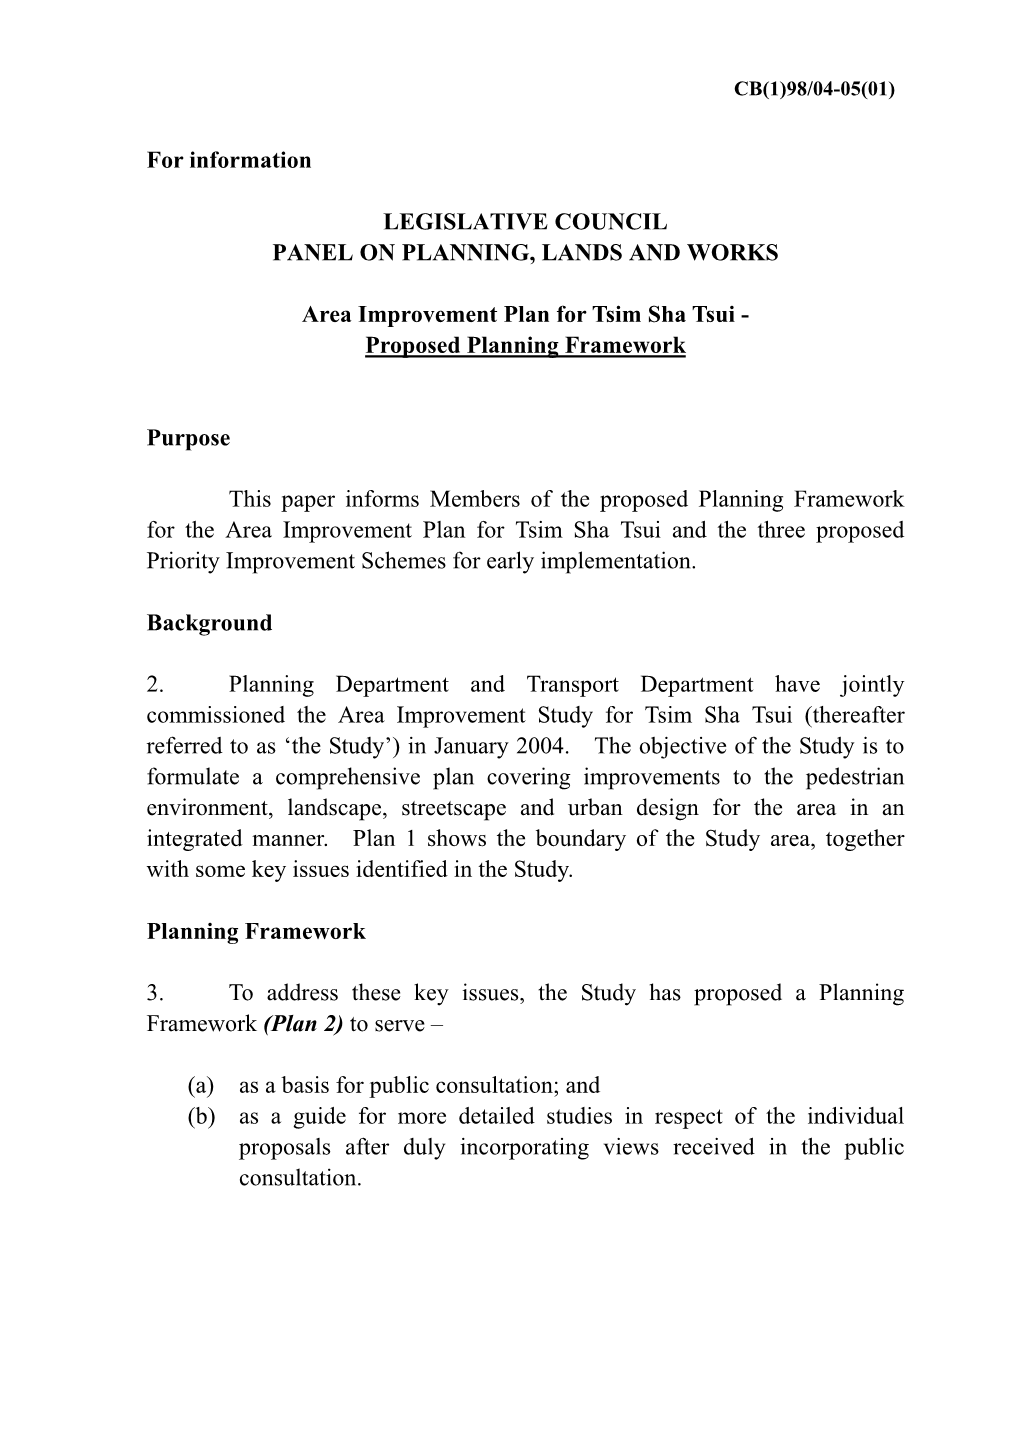 Area Improvement Plan for Tsim Sha Tsui - Proposed Planning Framework